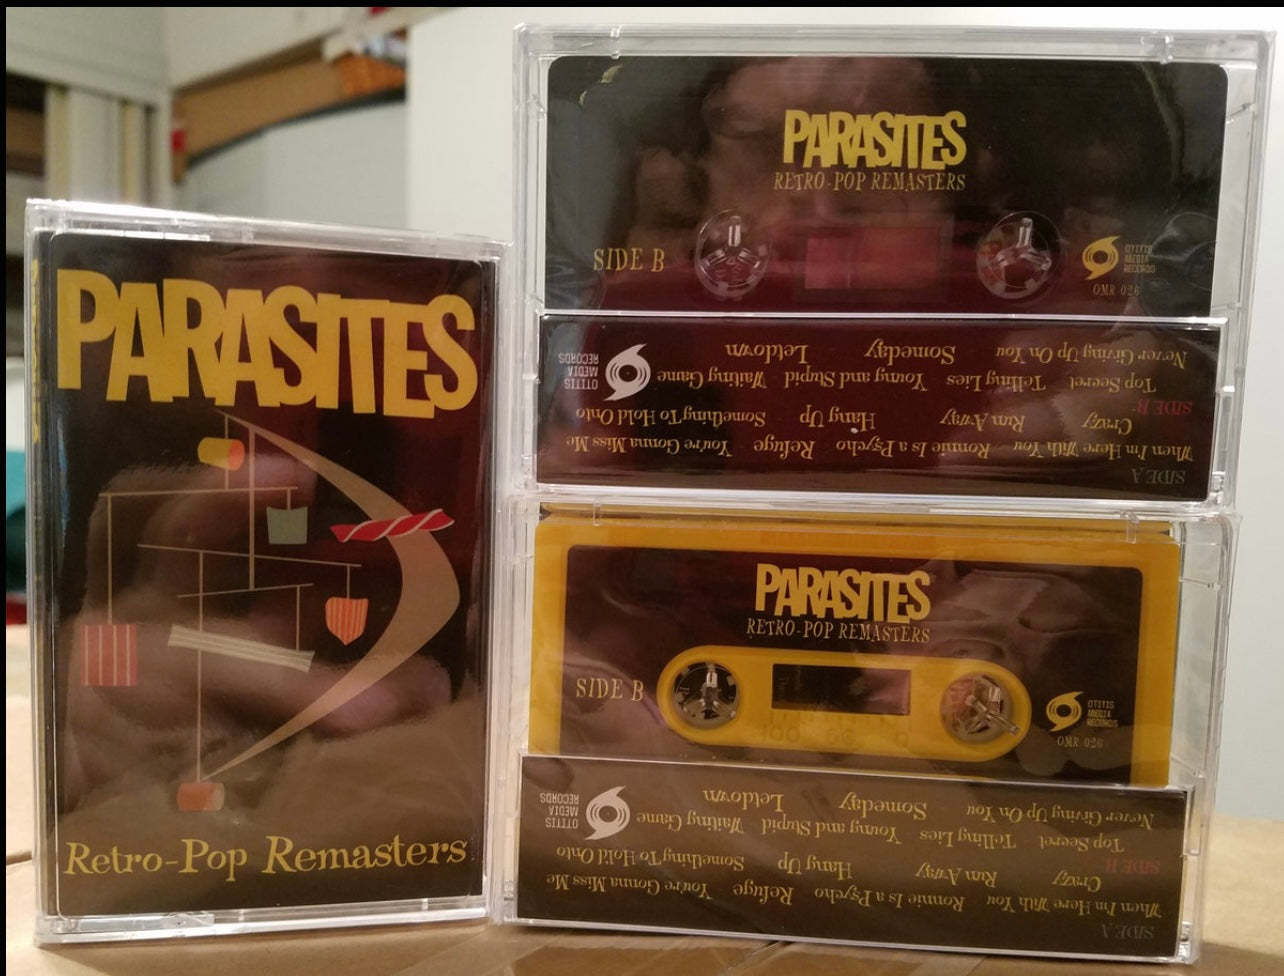 OMR-026 PARASITES “Retro-Pop Remasters” CASSETTE TAPES